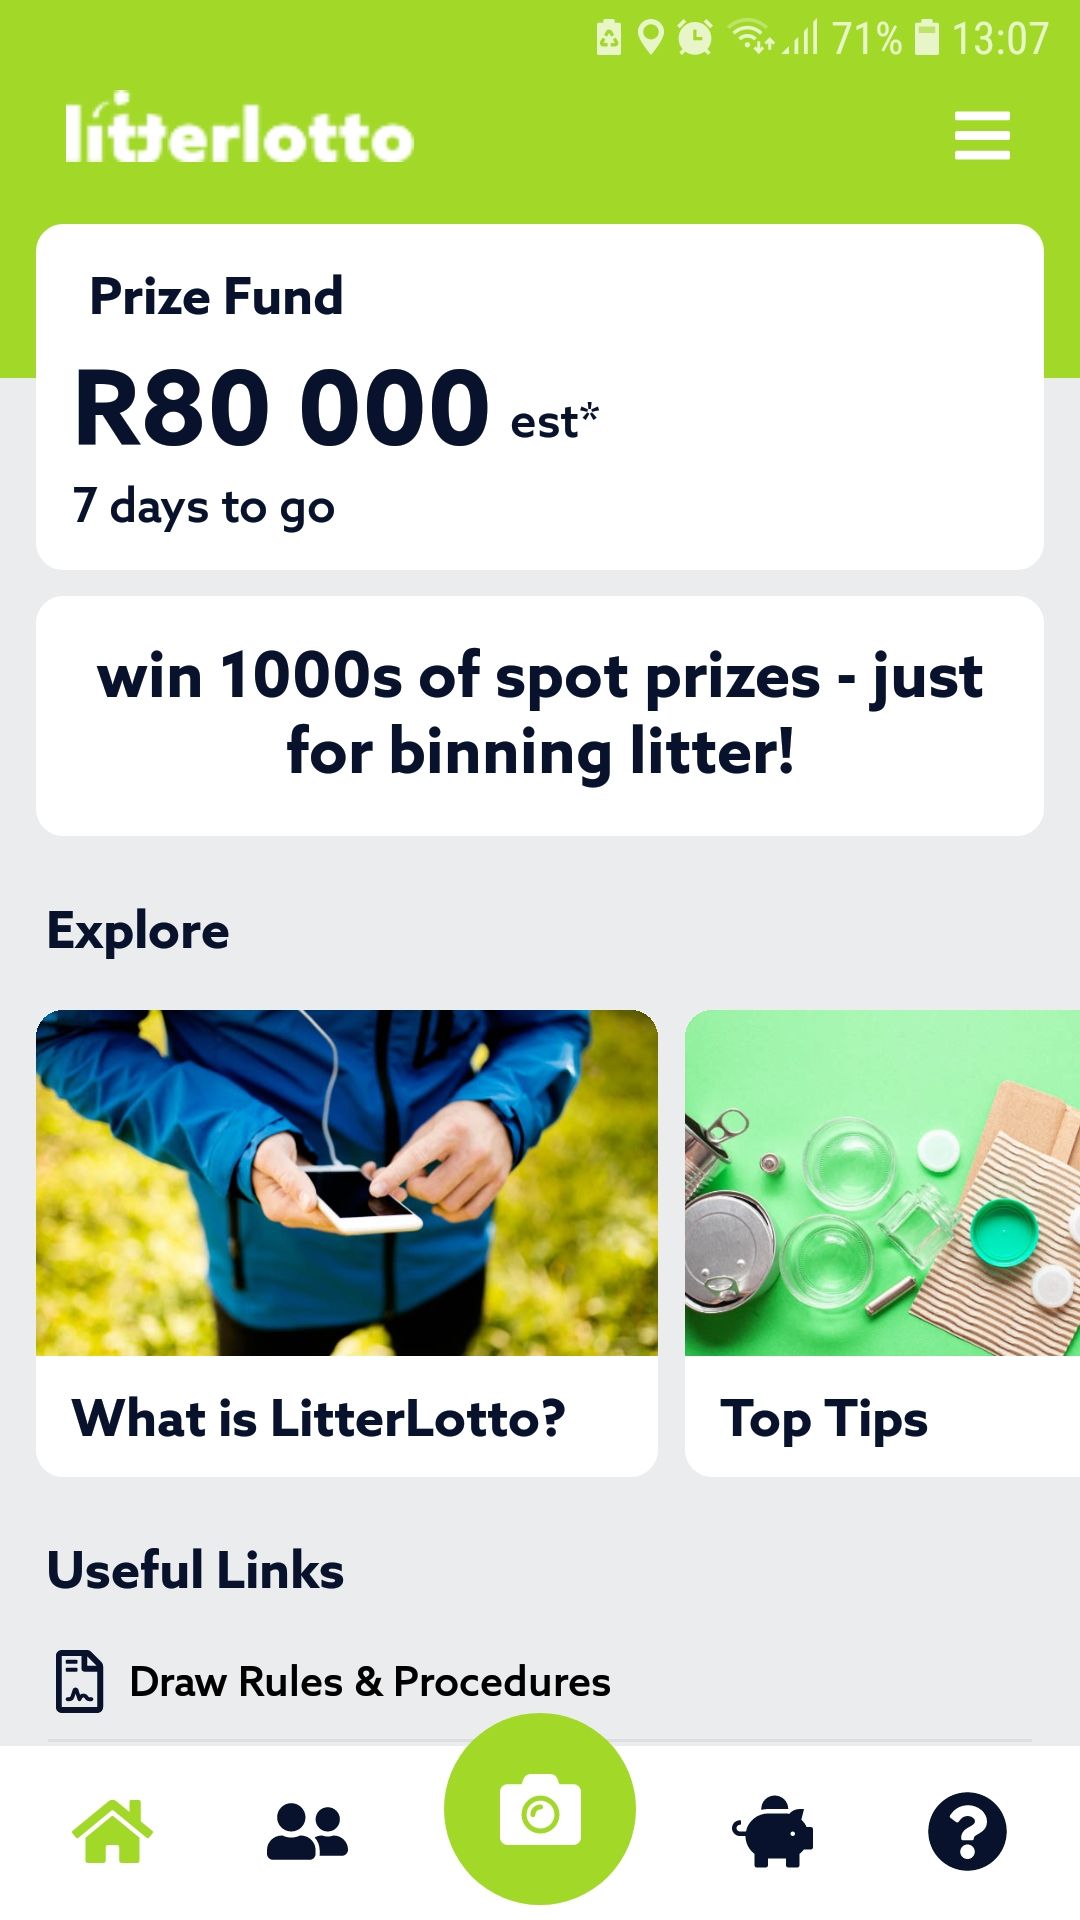 LitterLotto mobile cleanup app prizefund